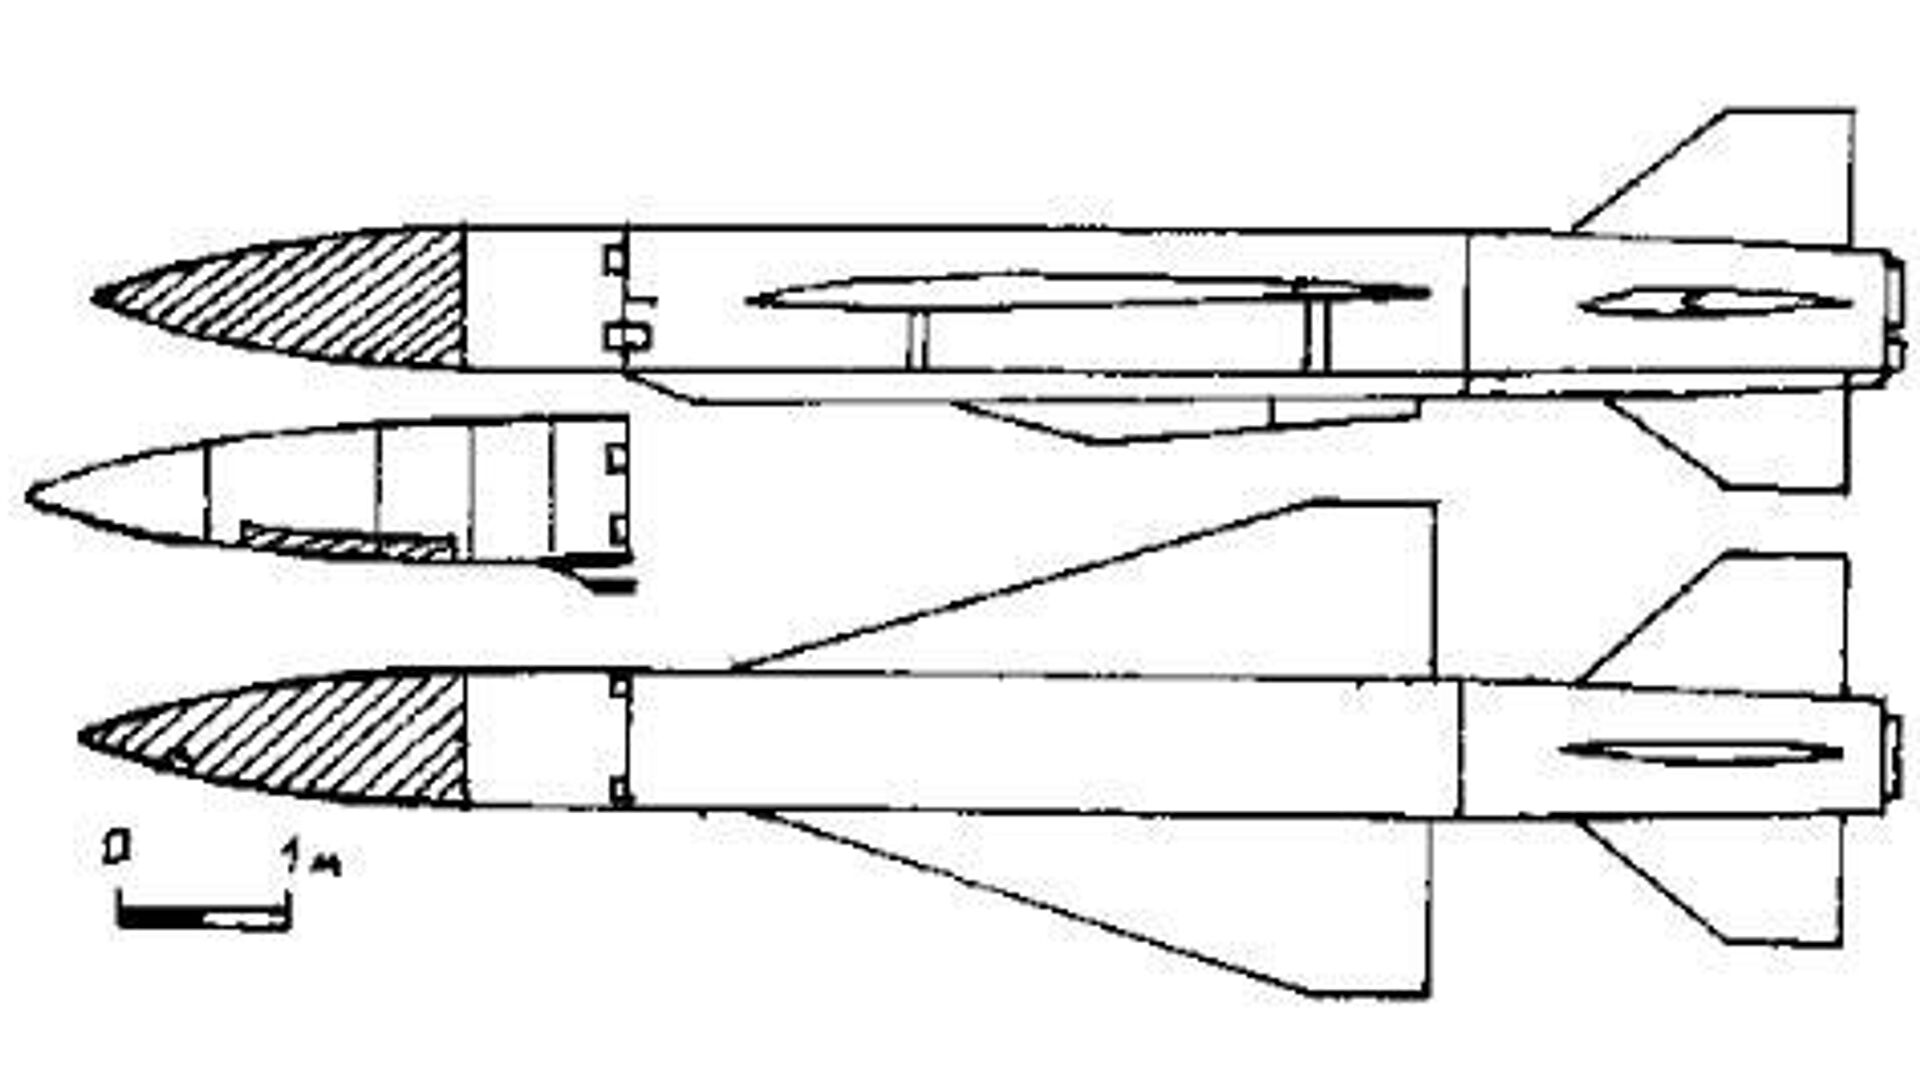 Kh-22 and Kh-22MP anti-ship cruise missiles. - Sputnik International, 1920, 30.12.2023